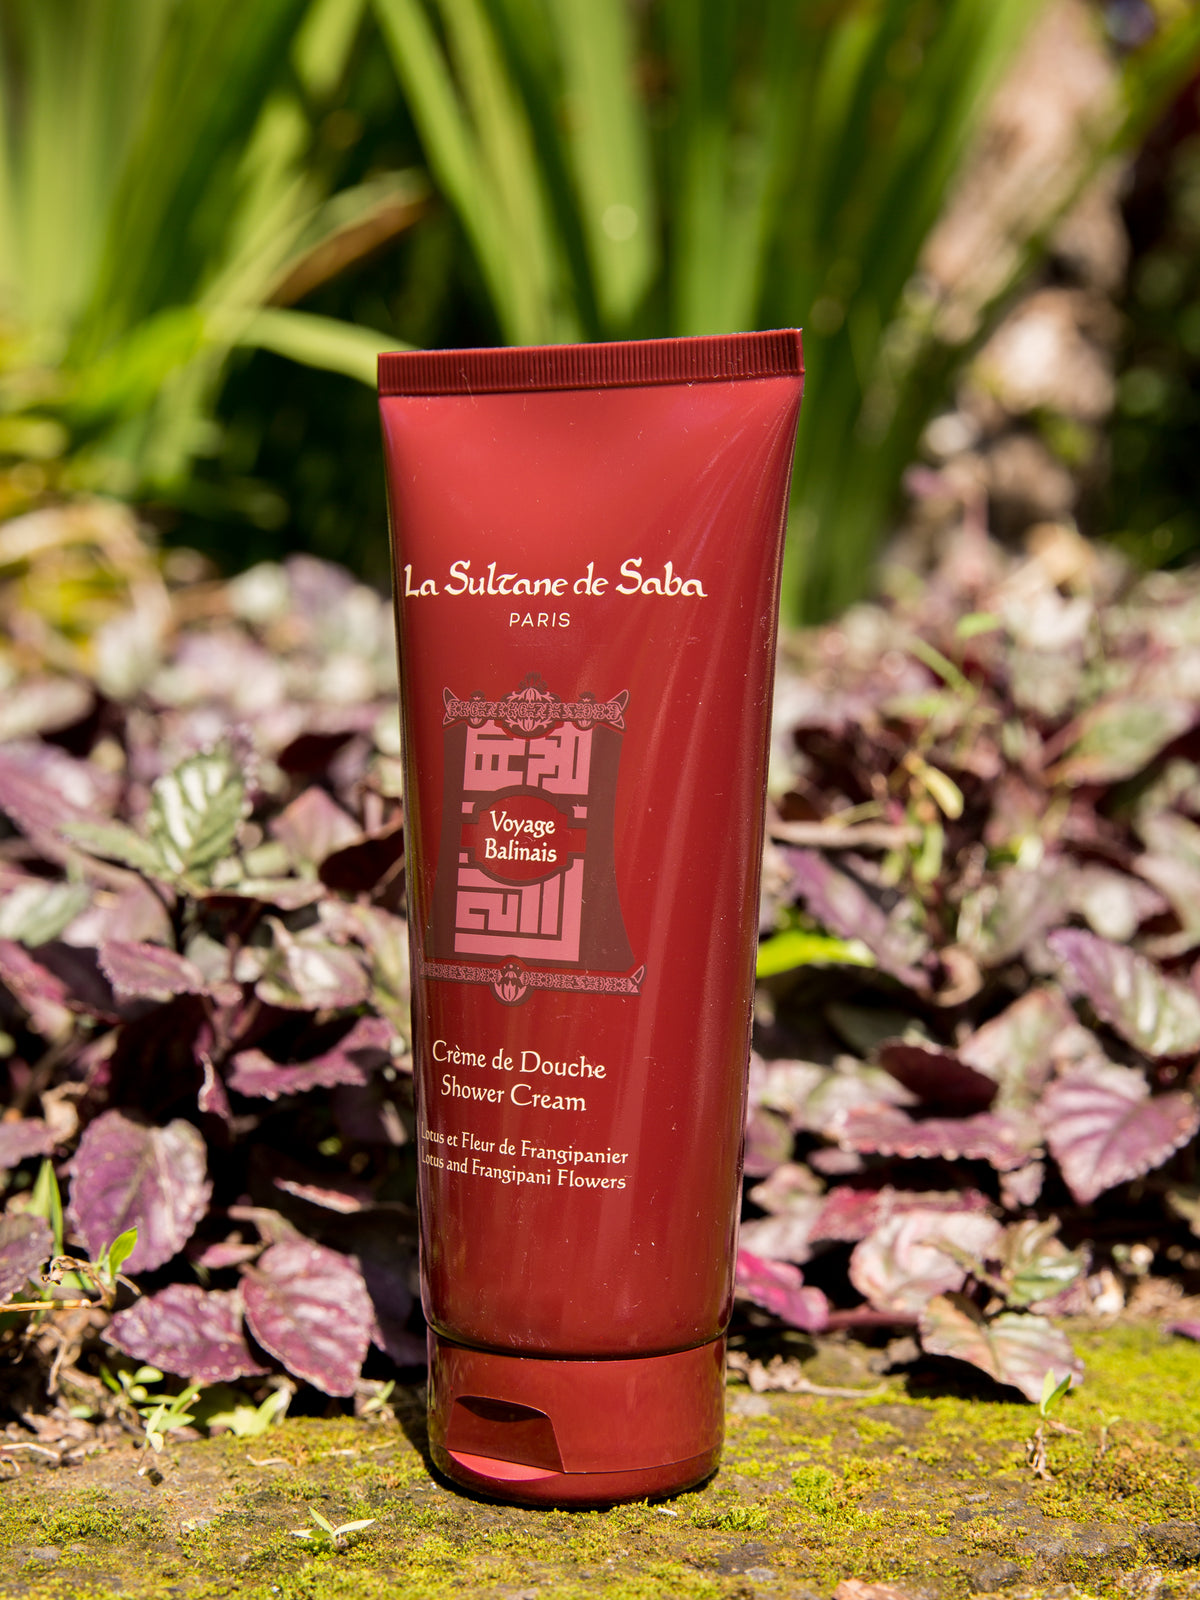 Shower Cream - Lotus and Frangipani Flower Fragrance